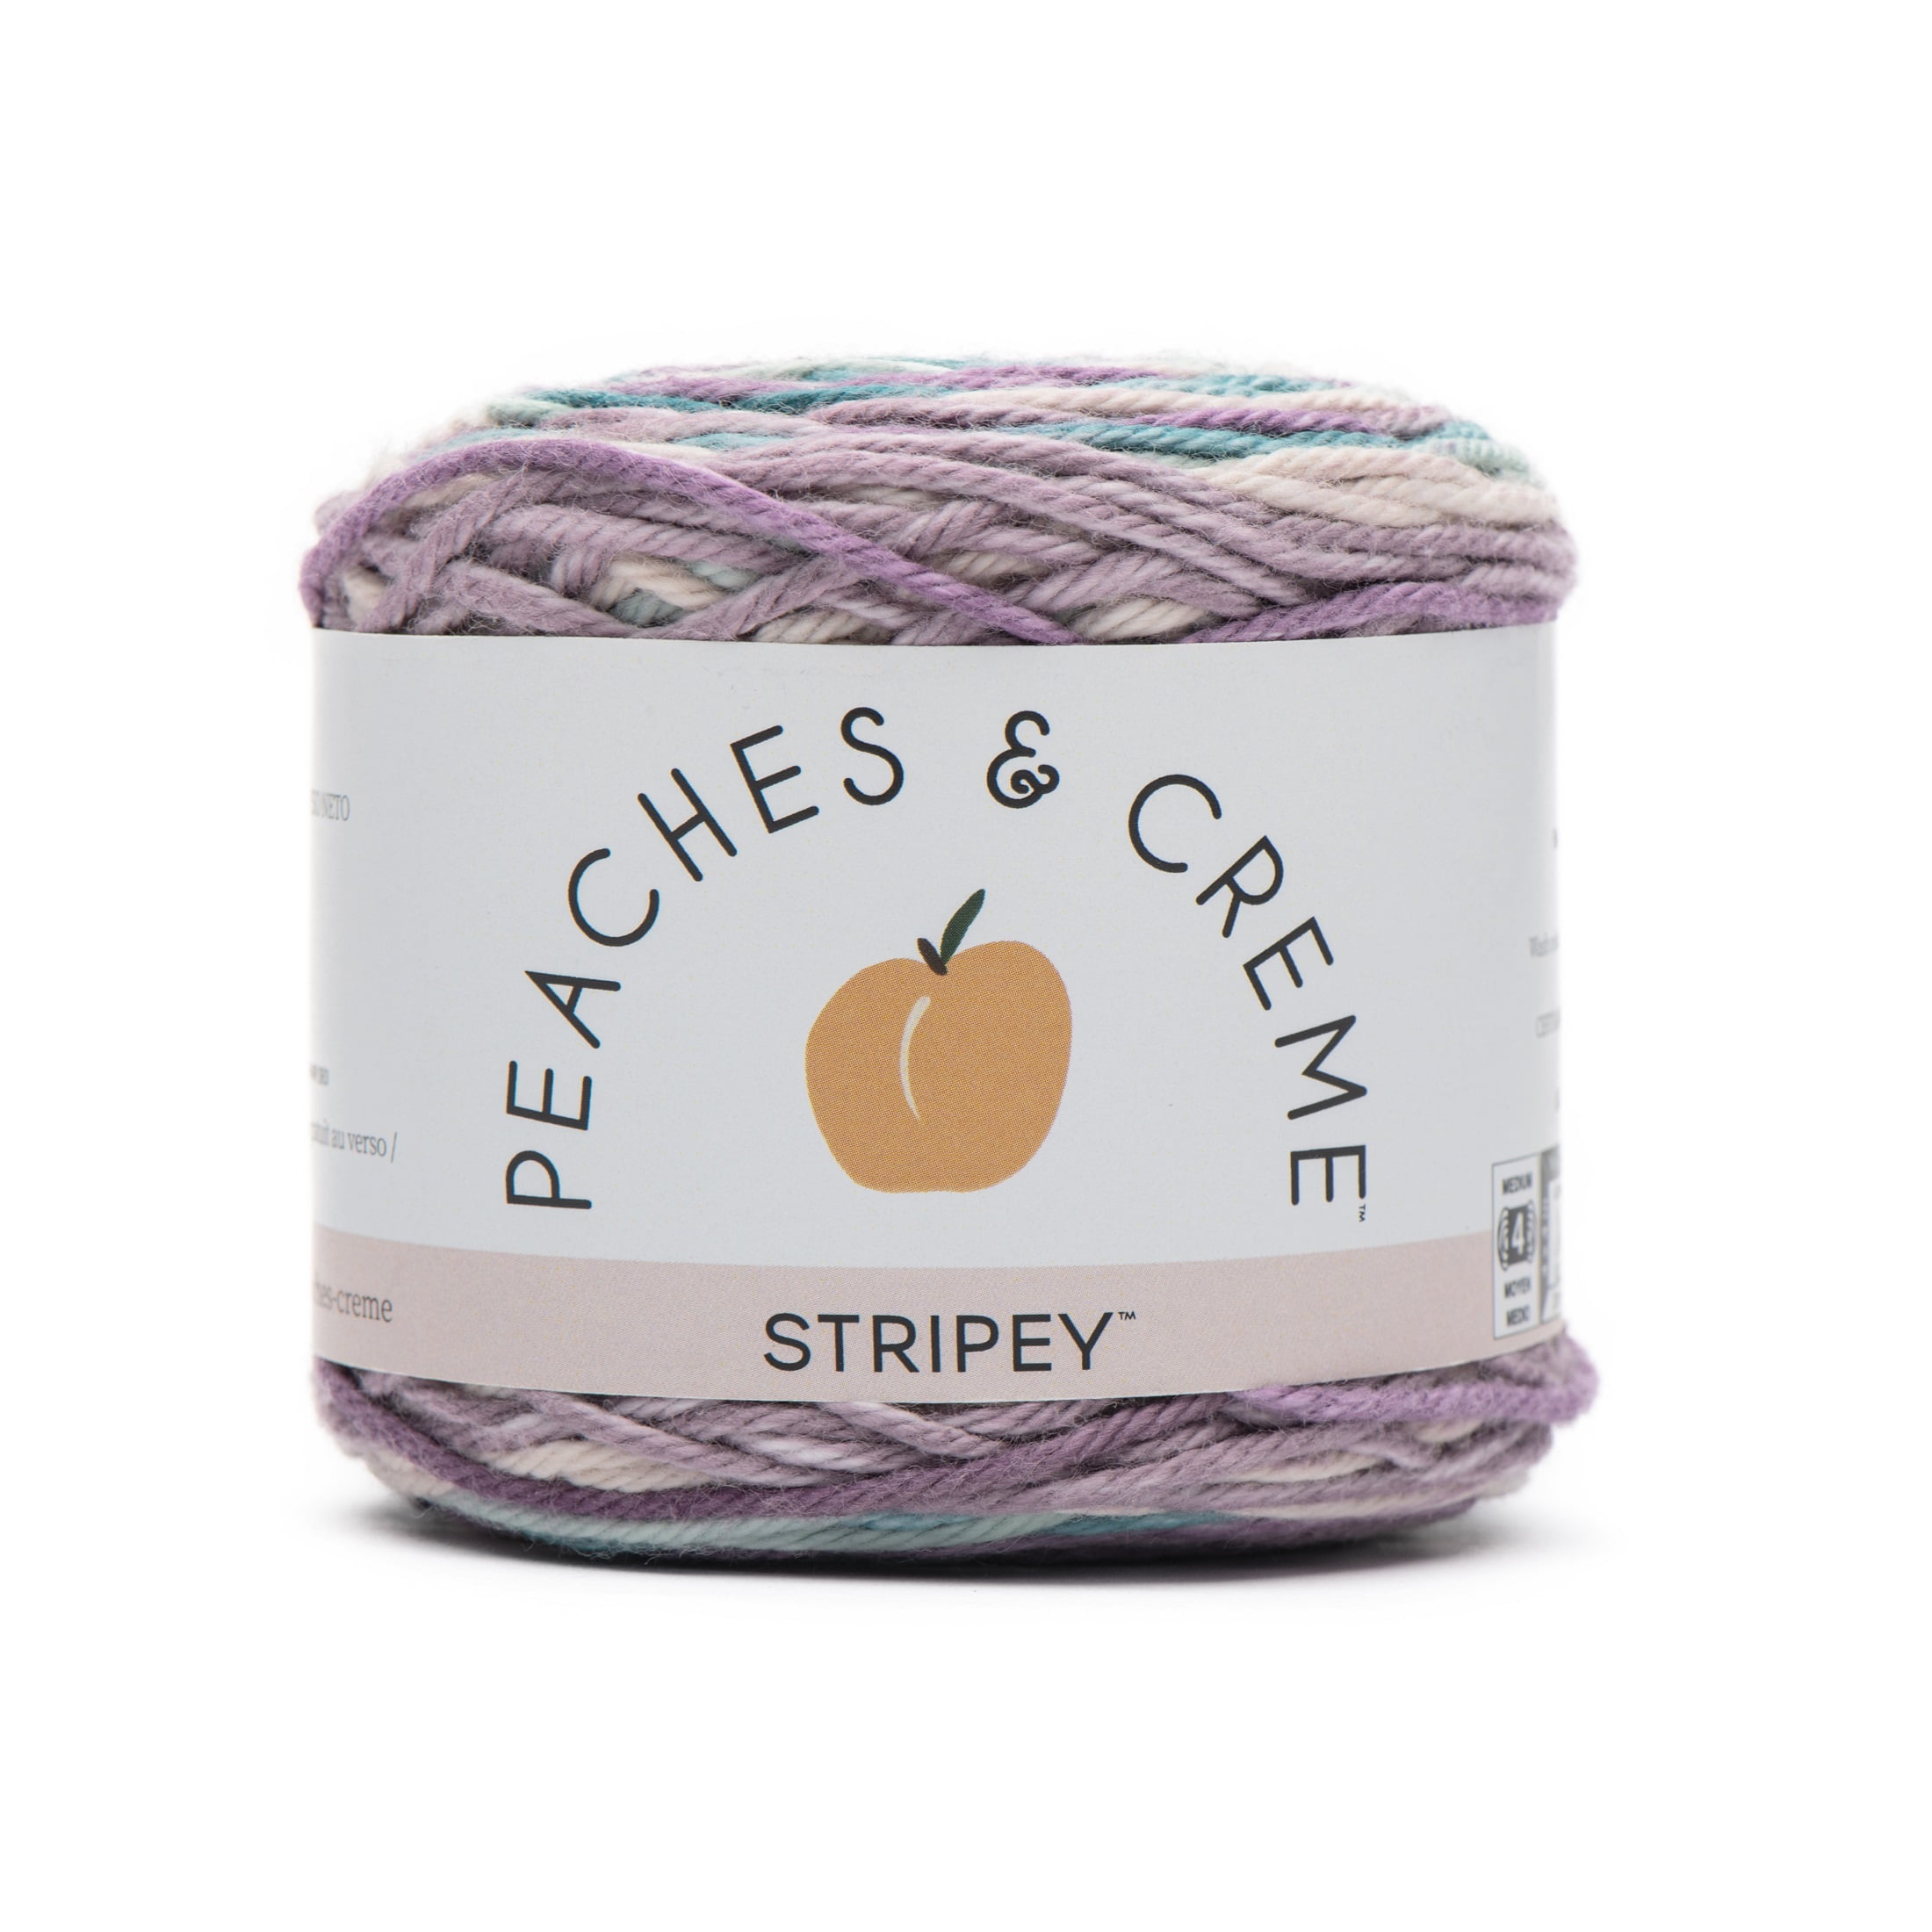 Peaches & Creme Stripey 4 Medium Cotton Yarn, Lavender Meadow 2oz/56.7g, 102 Yards